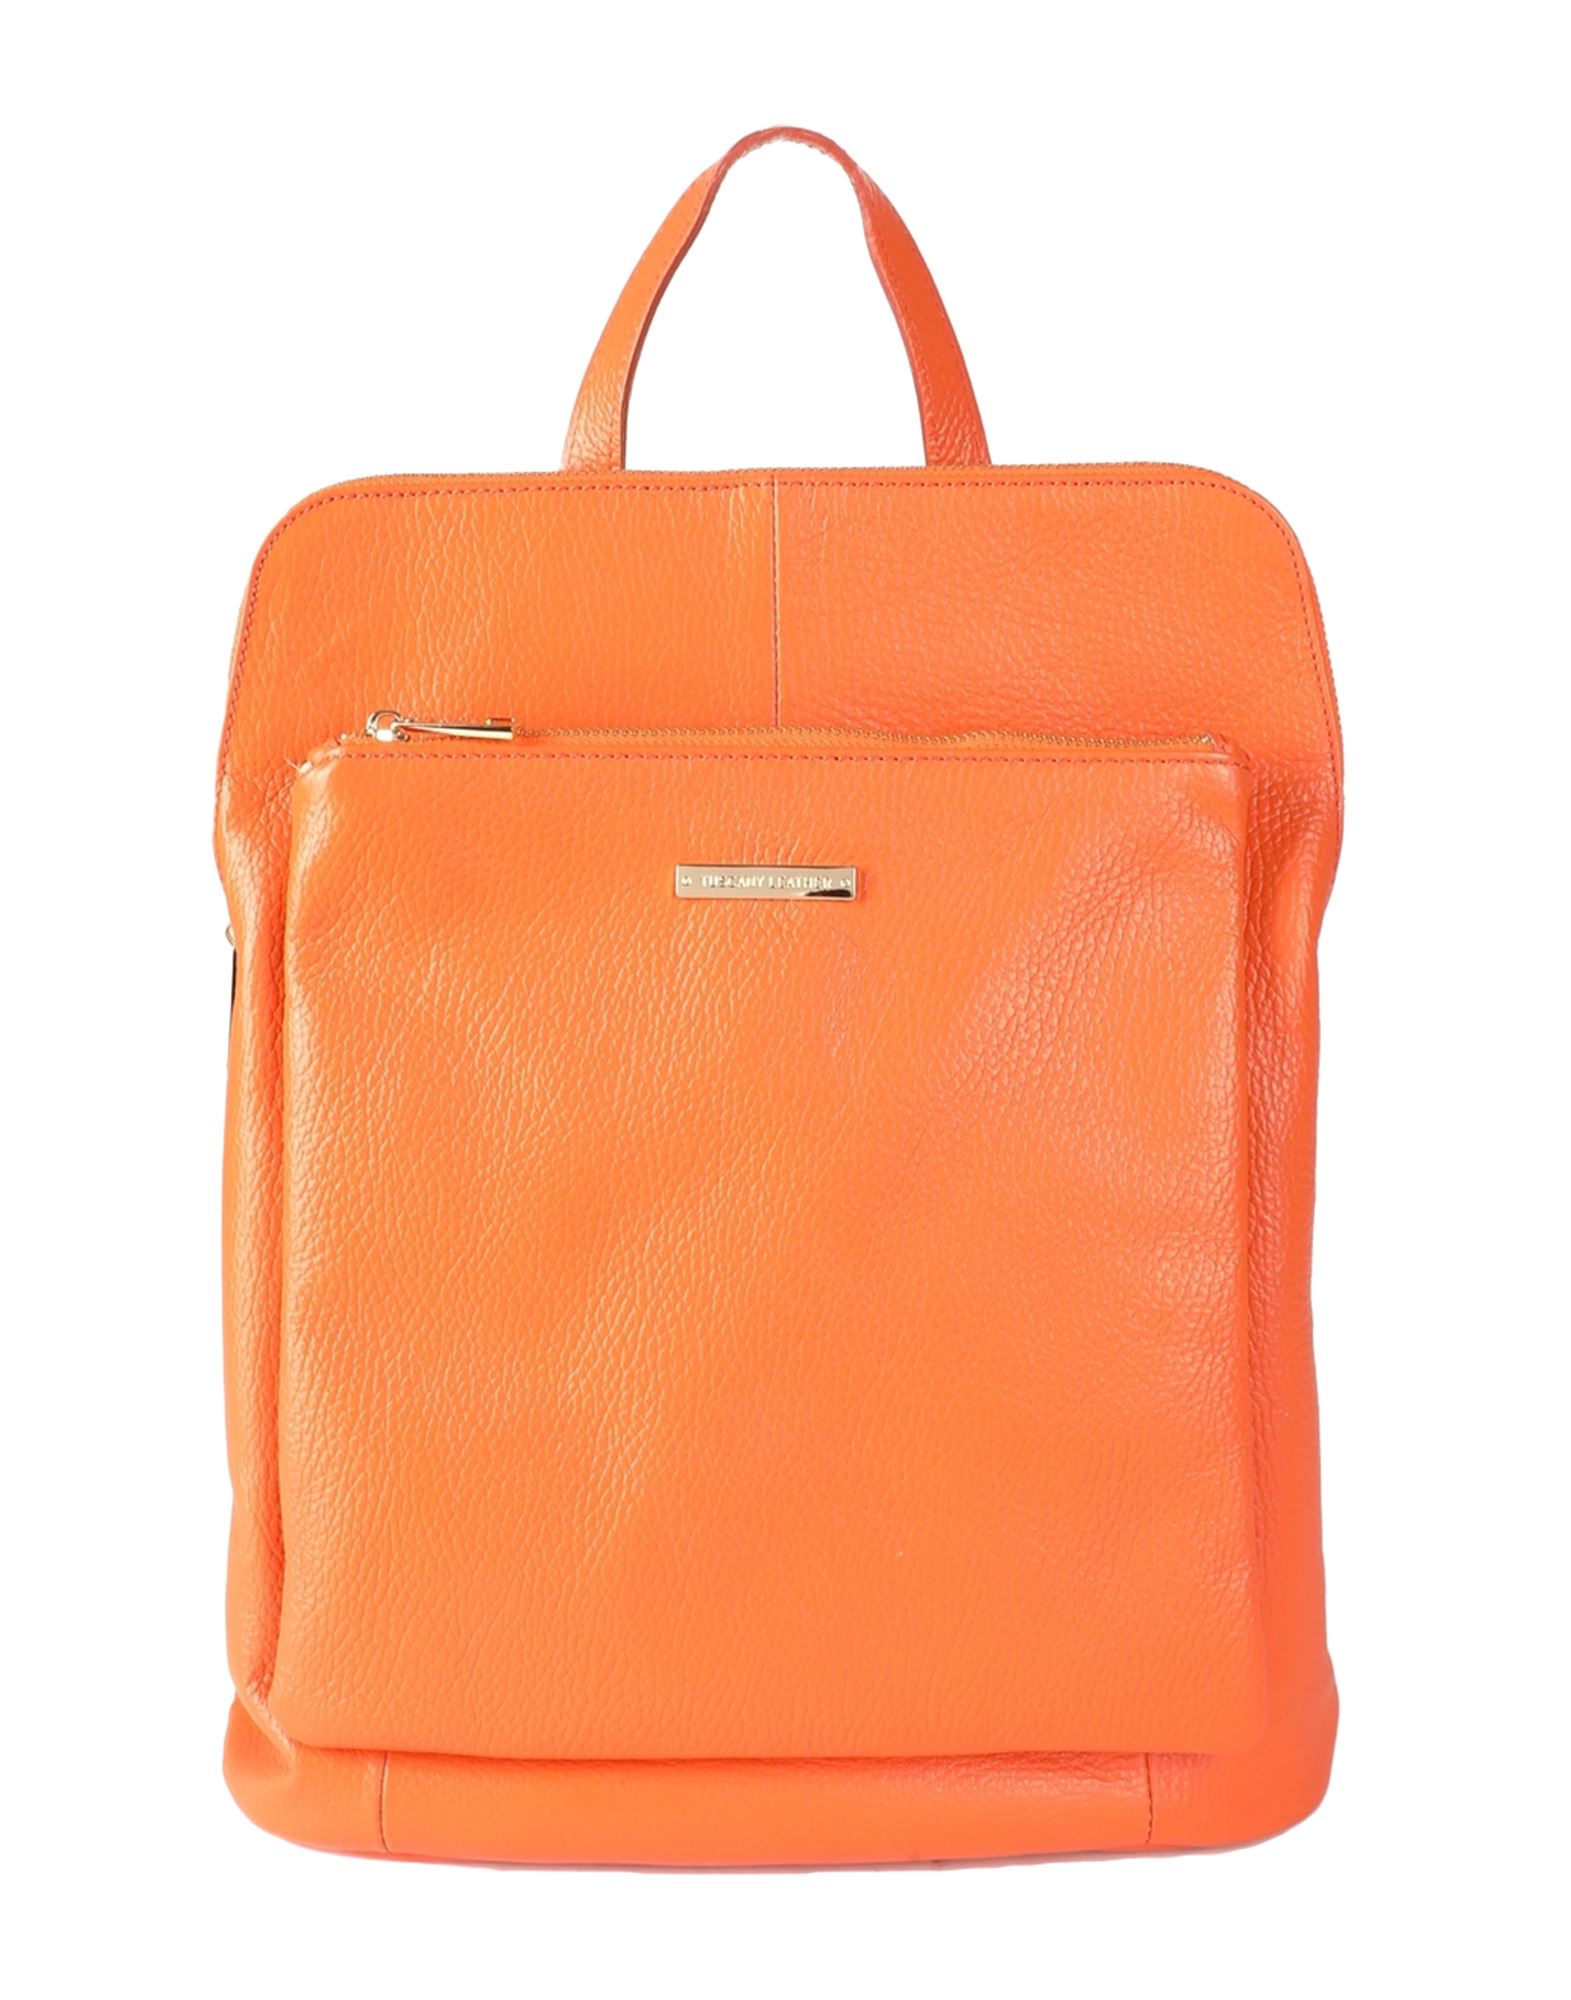 Tuscany Leather Backpacks In Orange